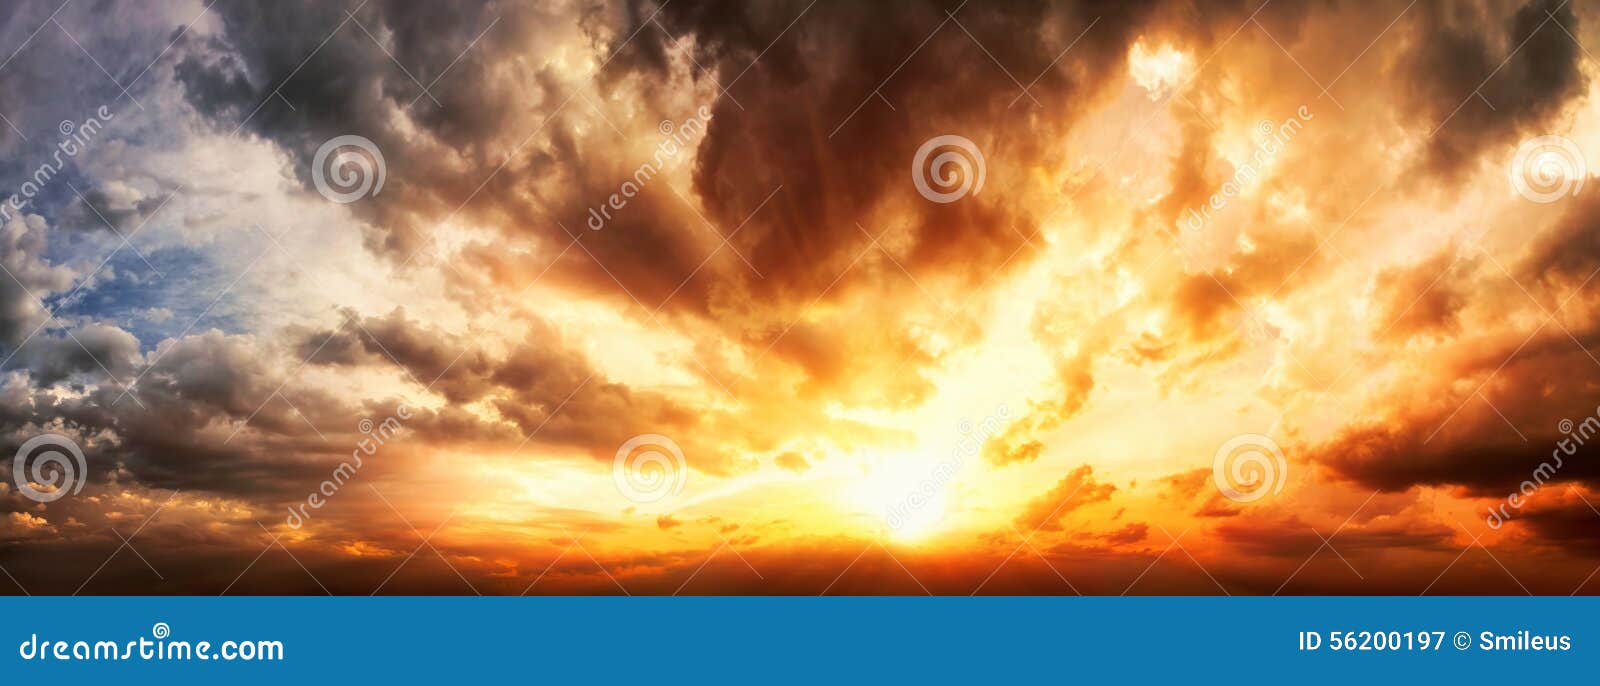 dramatic sunset sky panorama